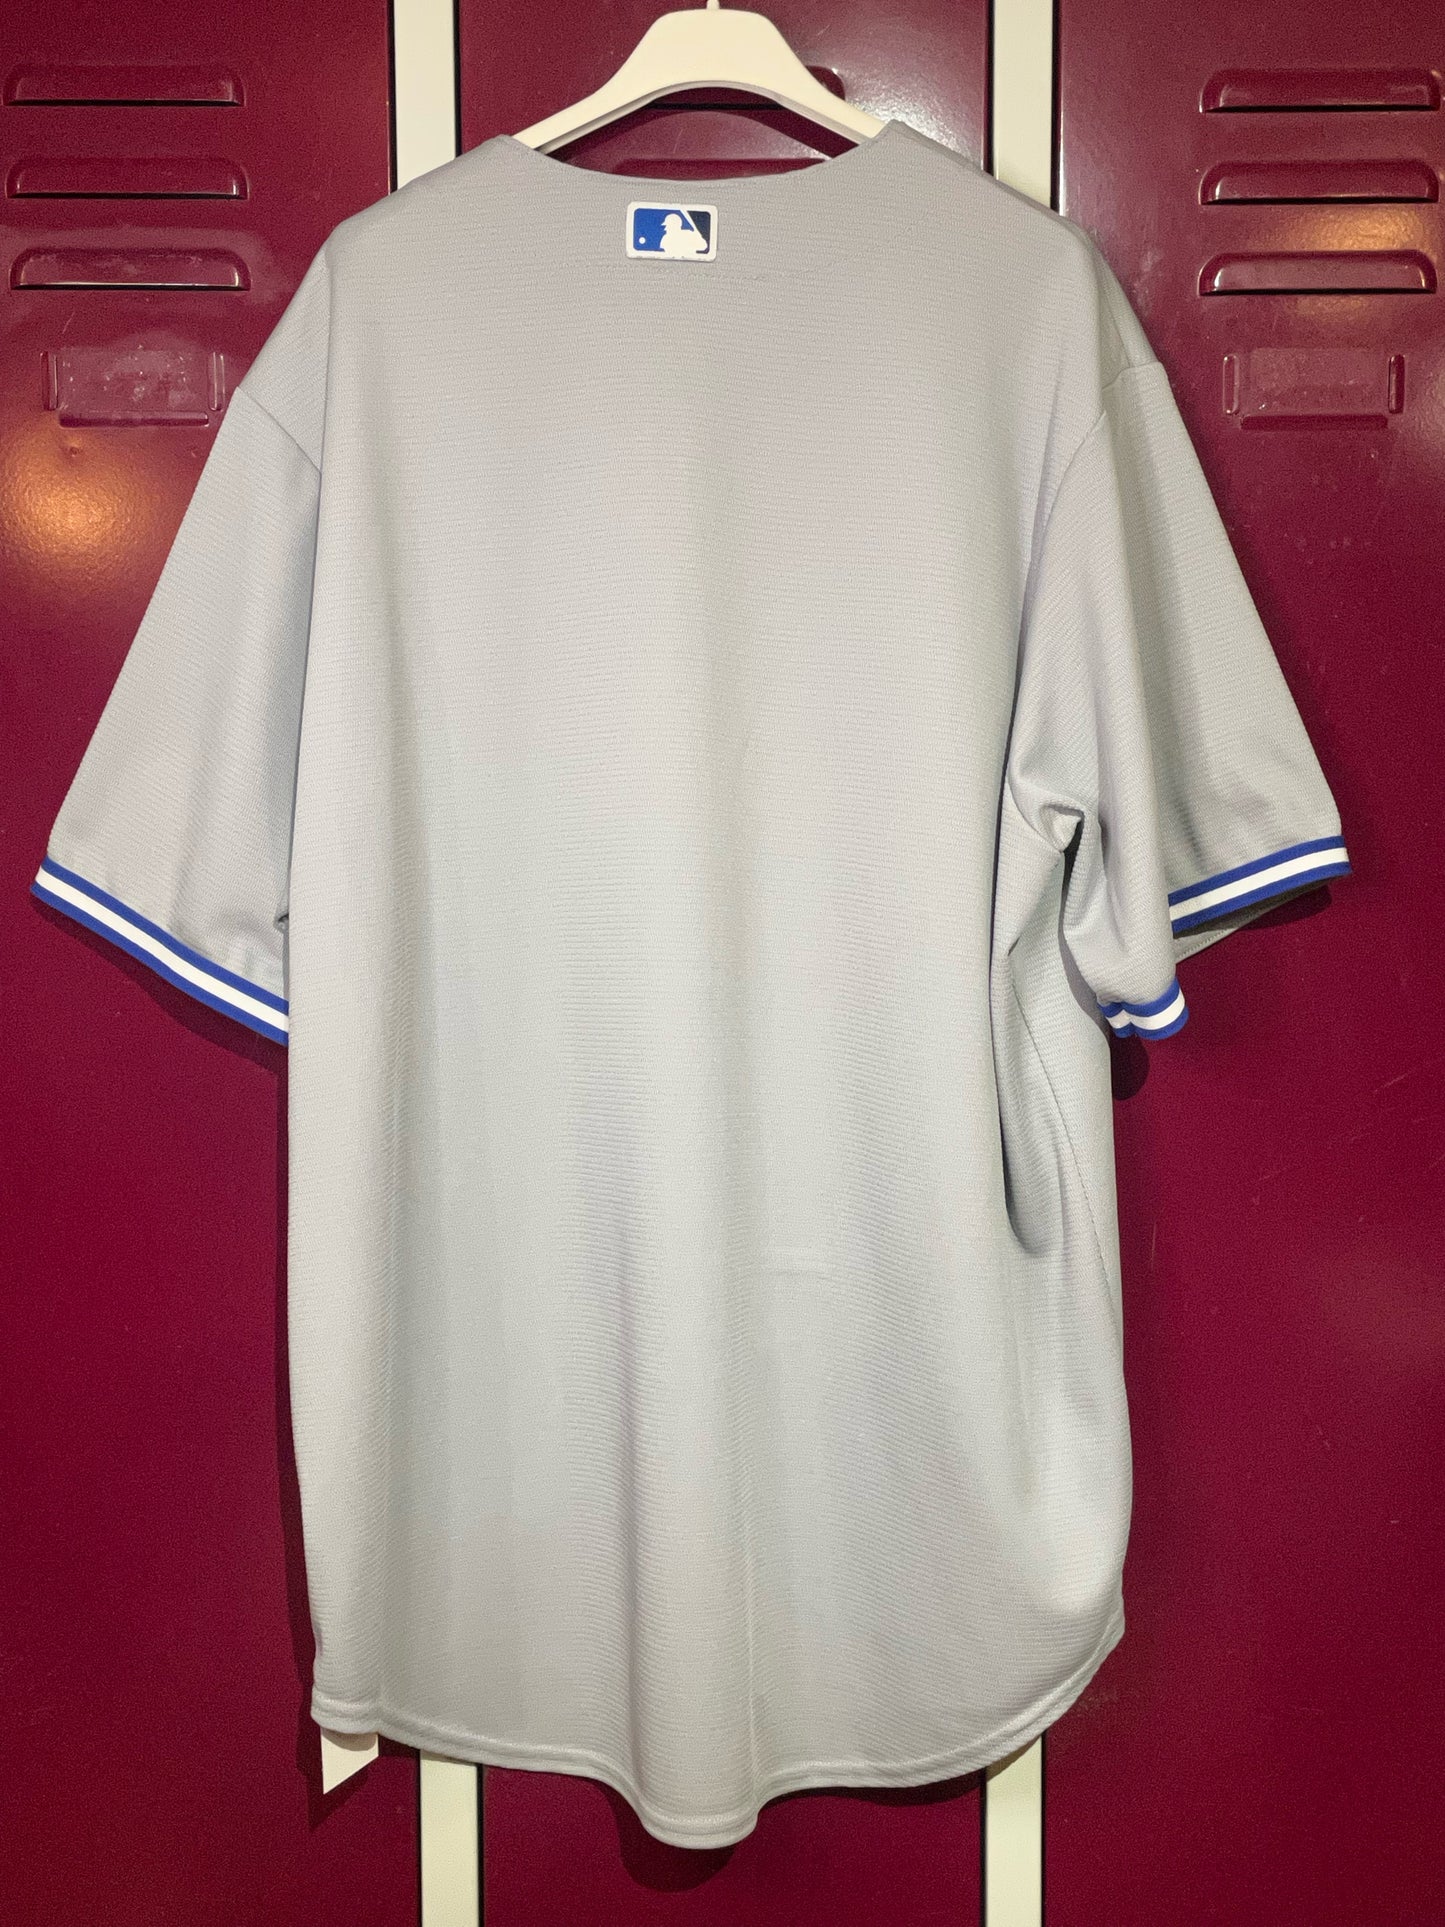 MAJESTIC TORONTO BLUE JAYS MLB BASEBALL JERSEY  SZ: XL